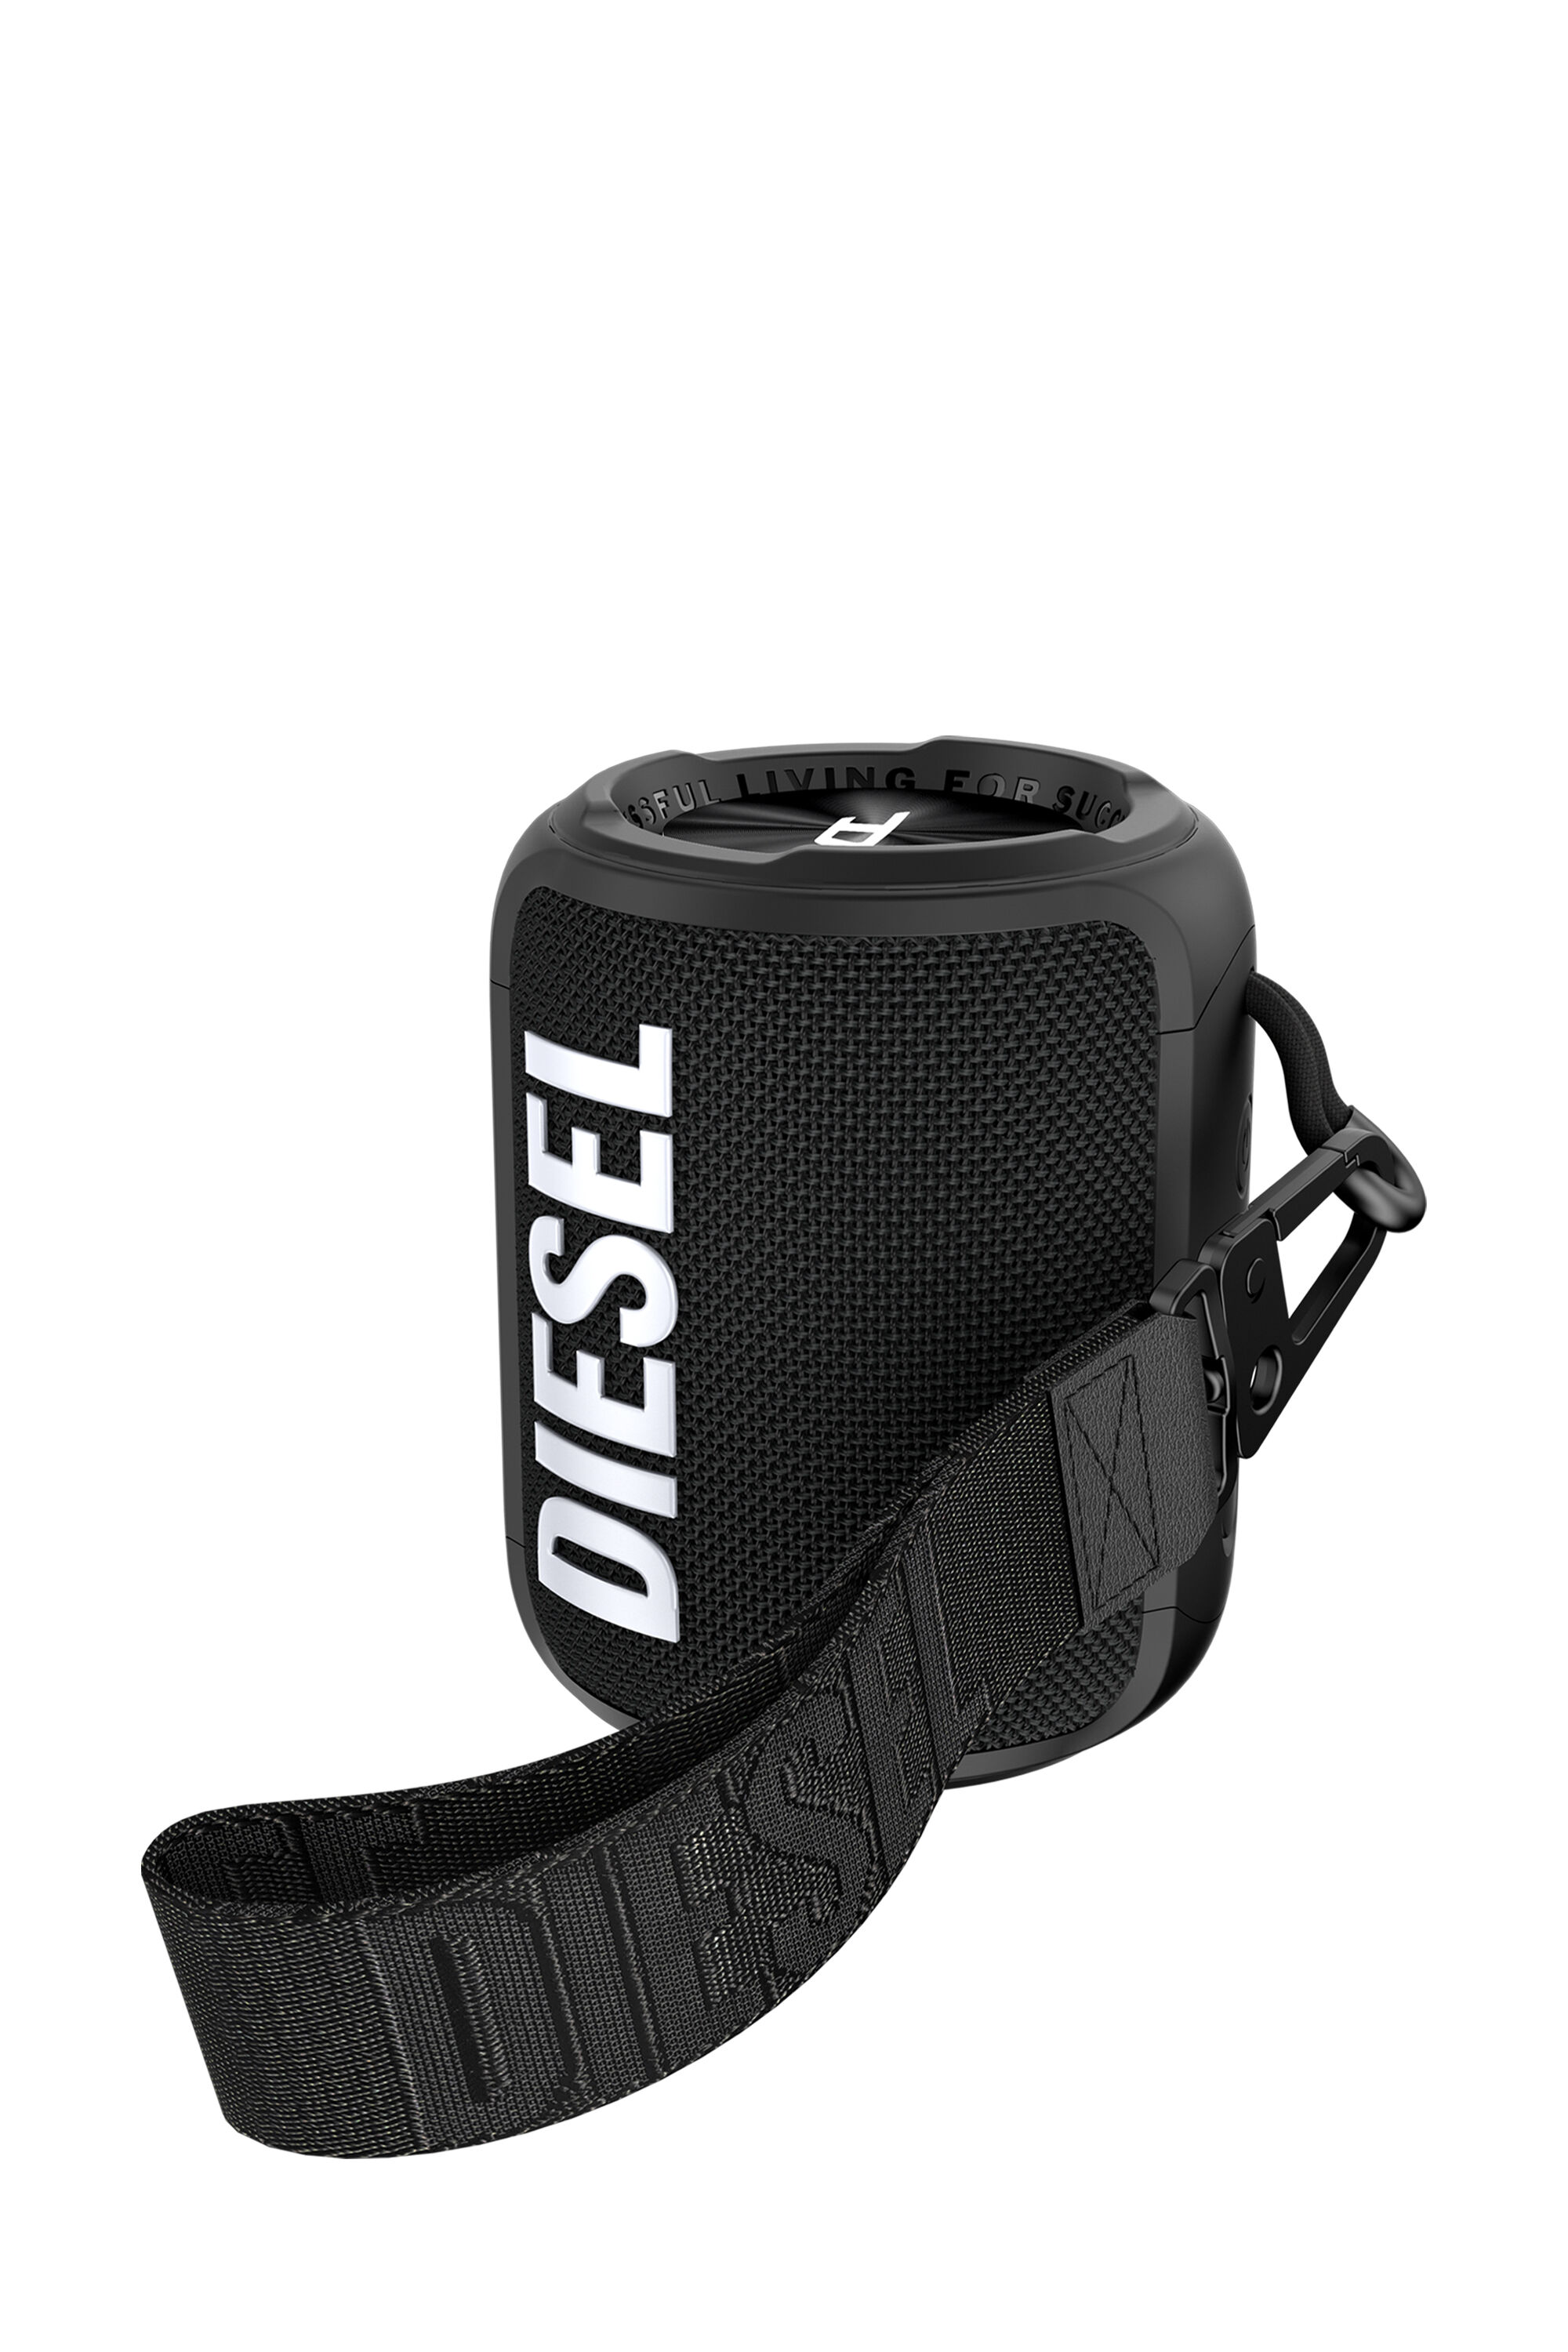 Diesel - 49349 BLUETOOTH SPEAKER, Unisex Wireless Speaker in Black - Image 3